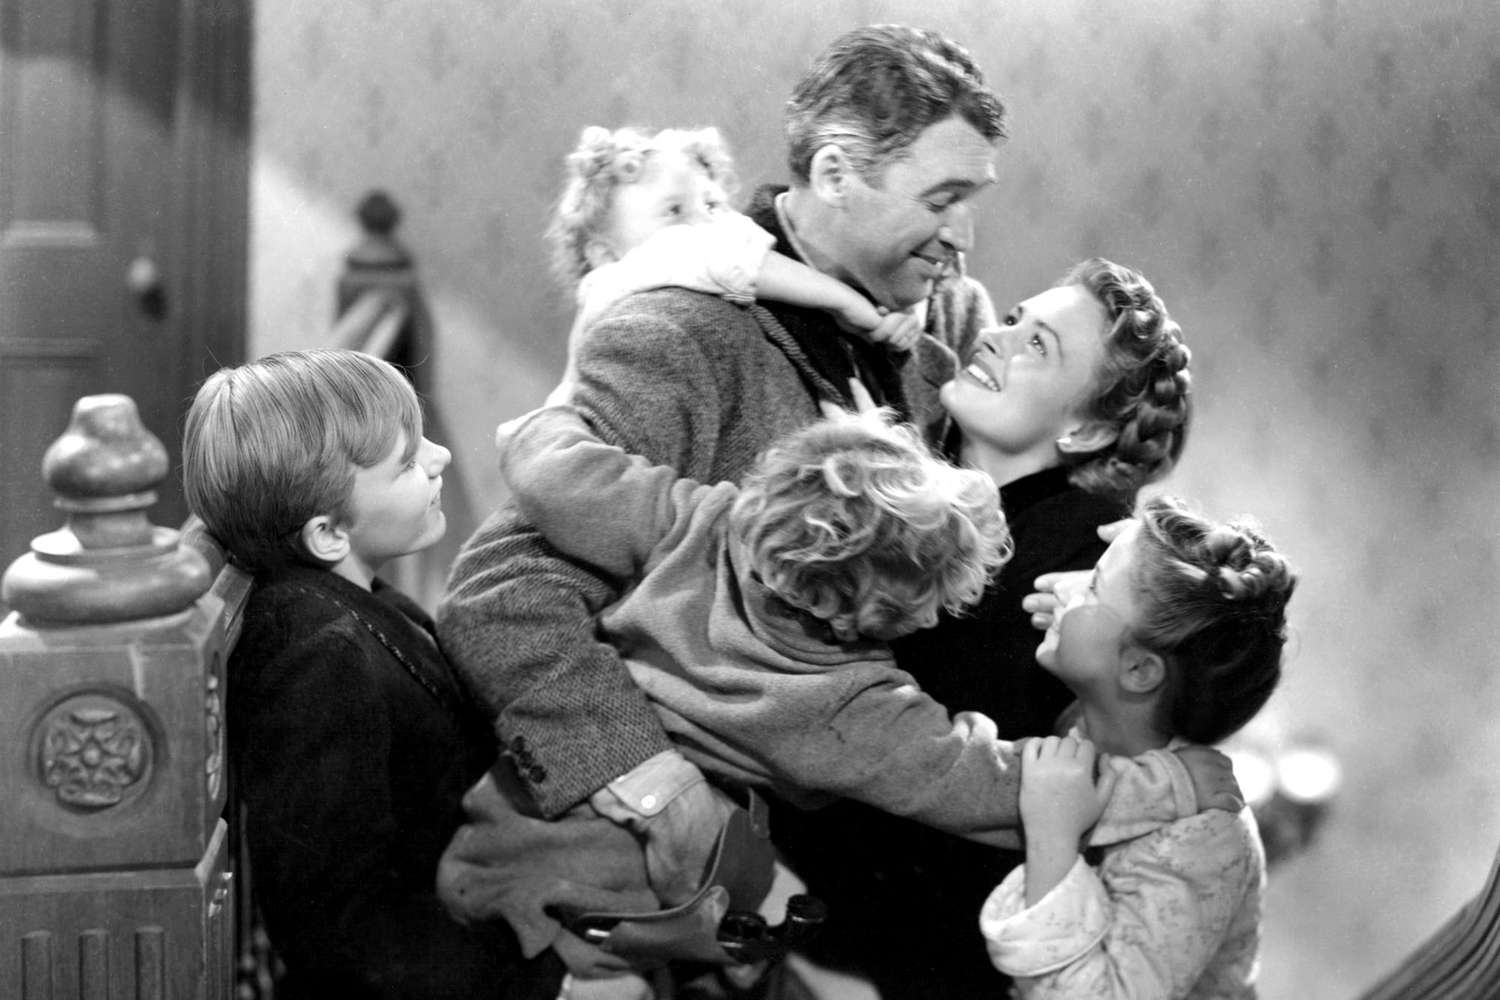 1. It's a Wonderful Life (1946)